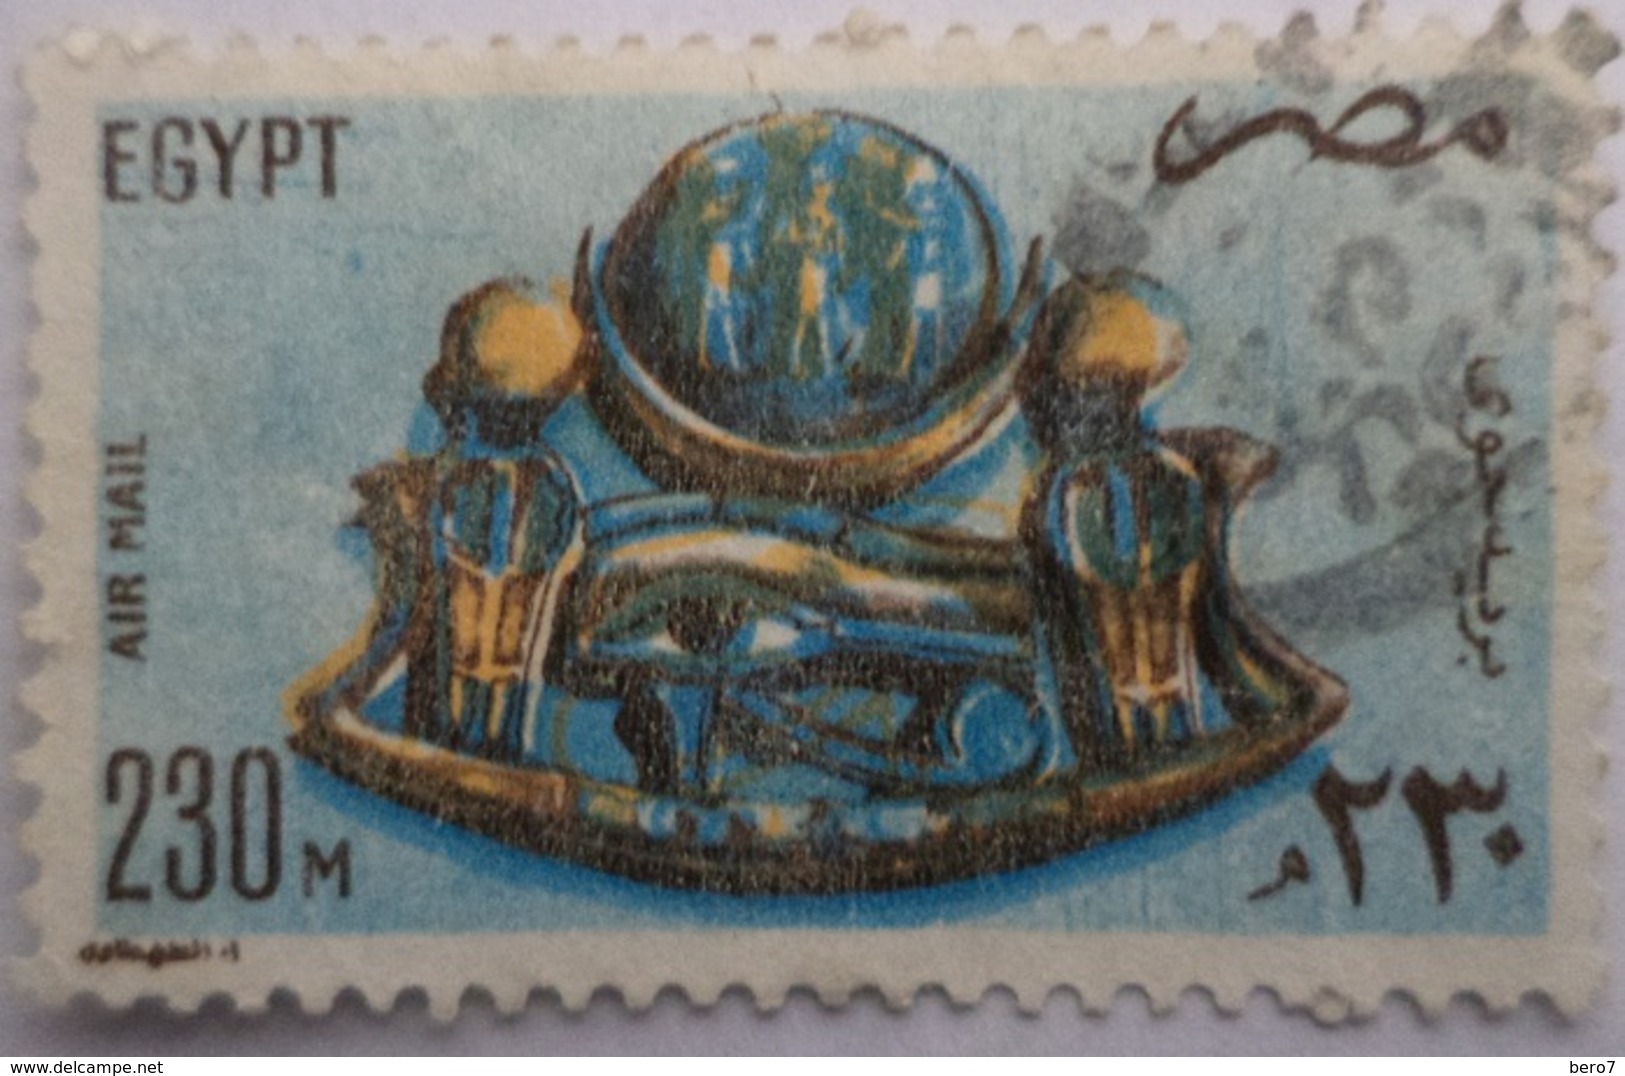 EGYPT - 1981- Old Egyptian Piece Of Jewelry- Air Mail -  (Egypte) (Egitto) (Ägypten) (Egipto) (Egypten) - Used Stamps